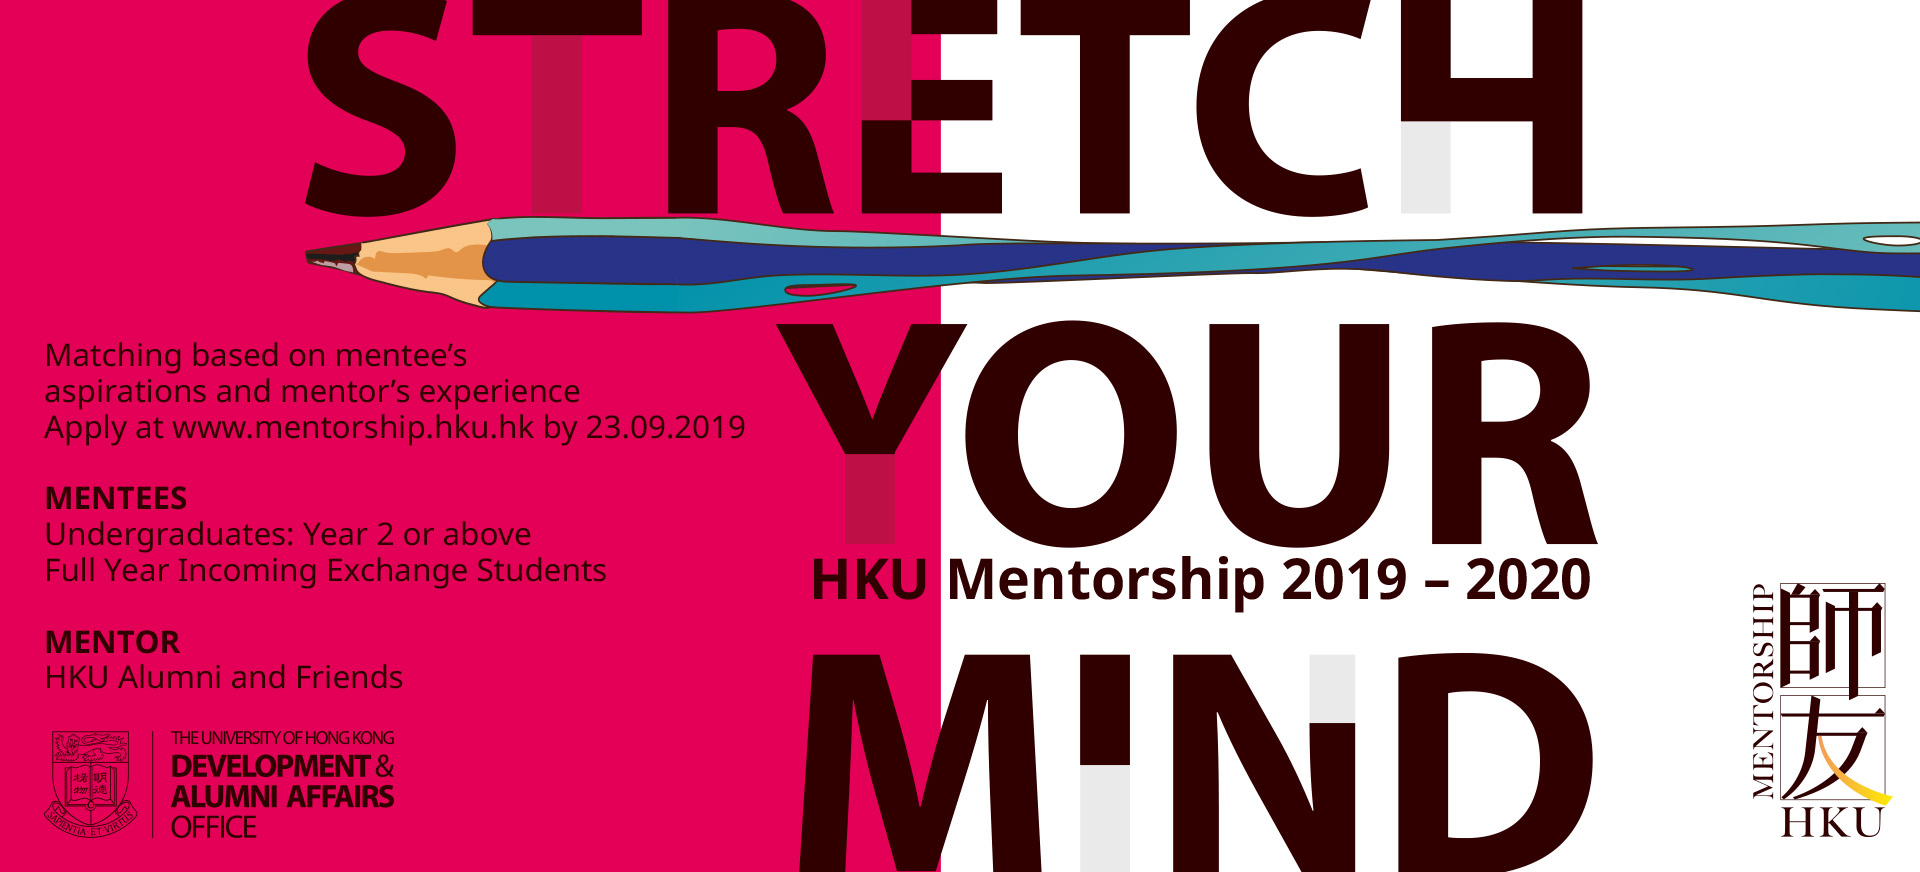 HKU Mentorship 2019 - 2020